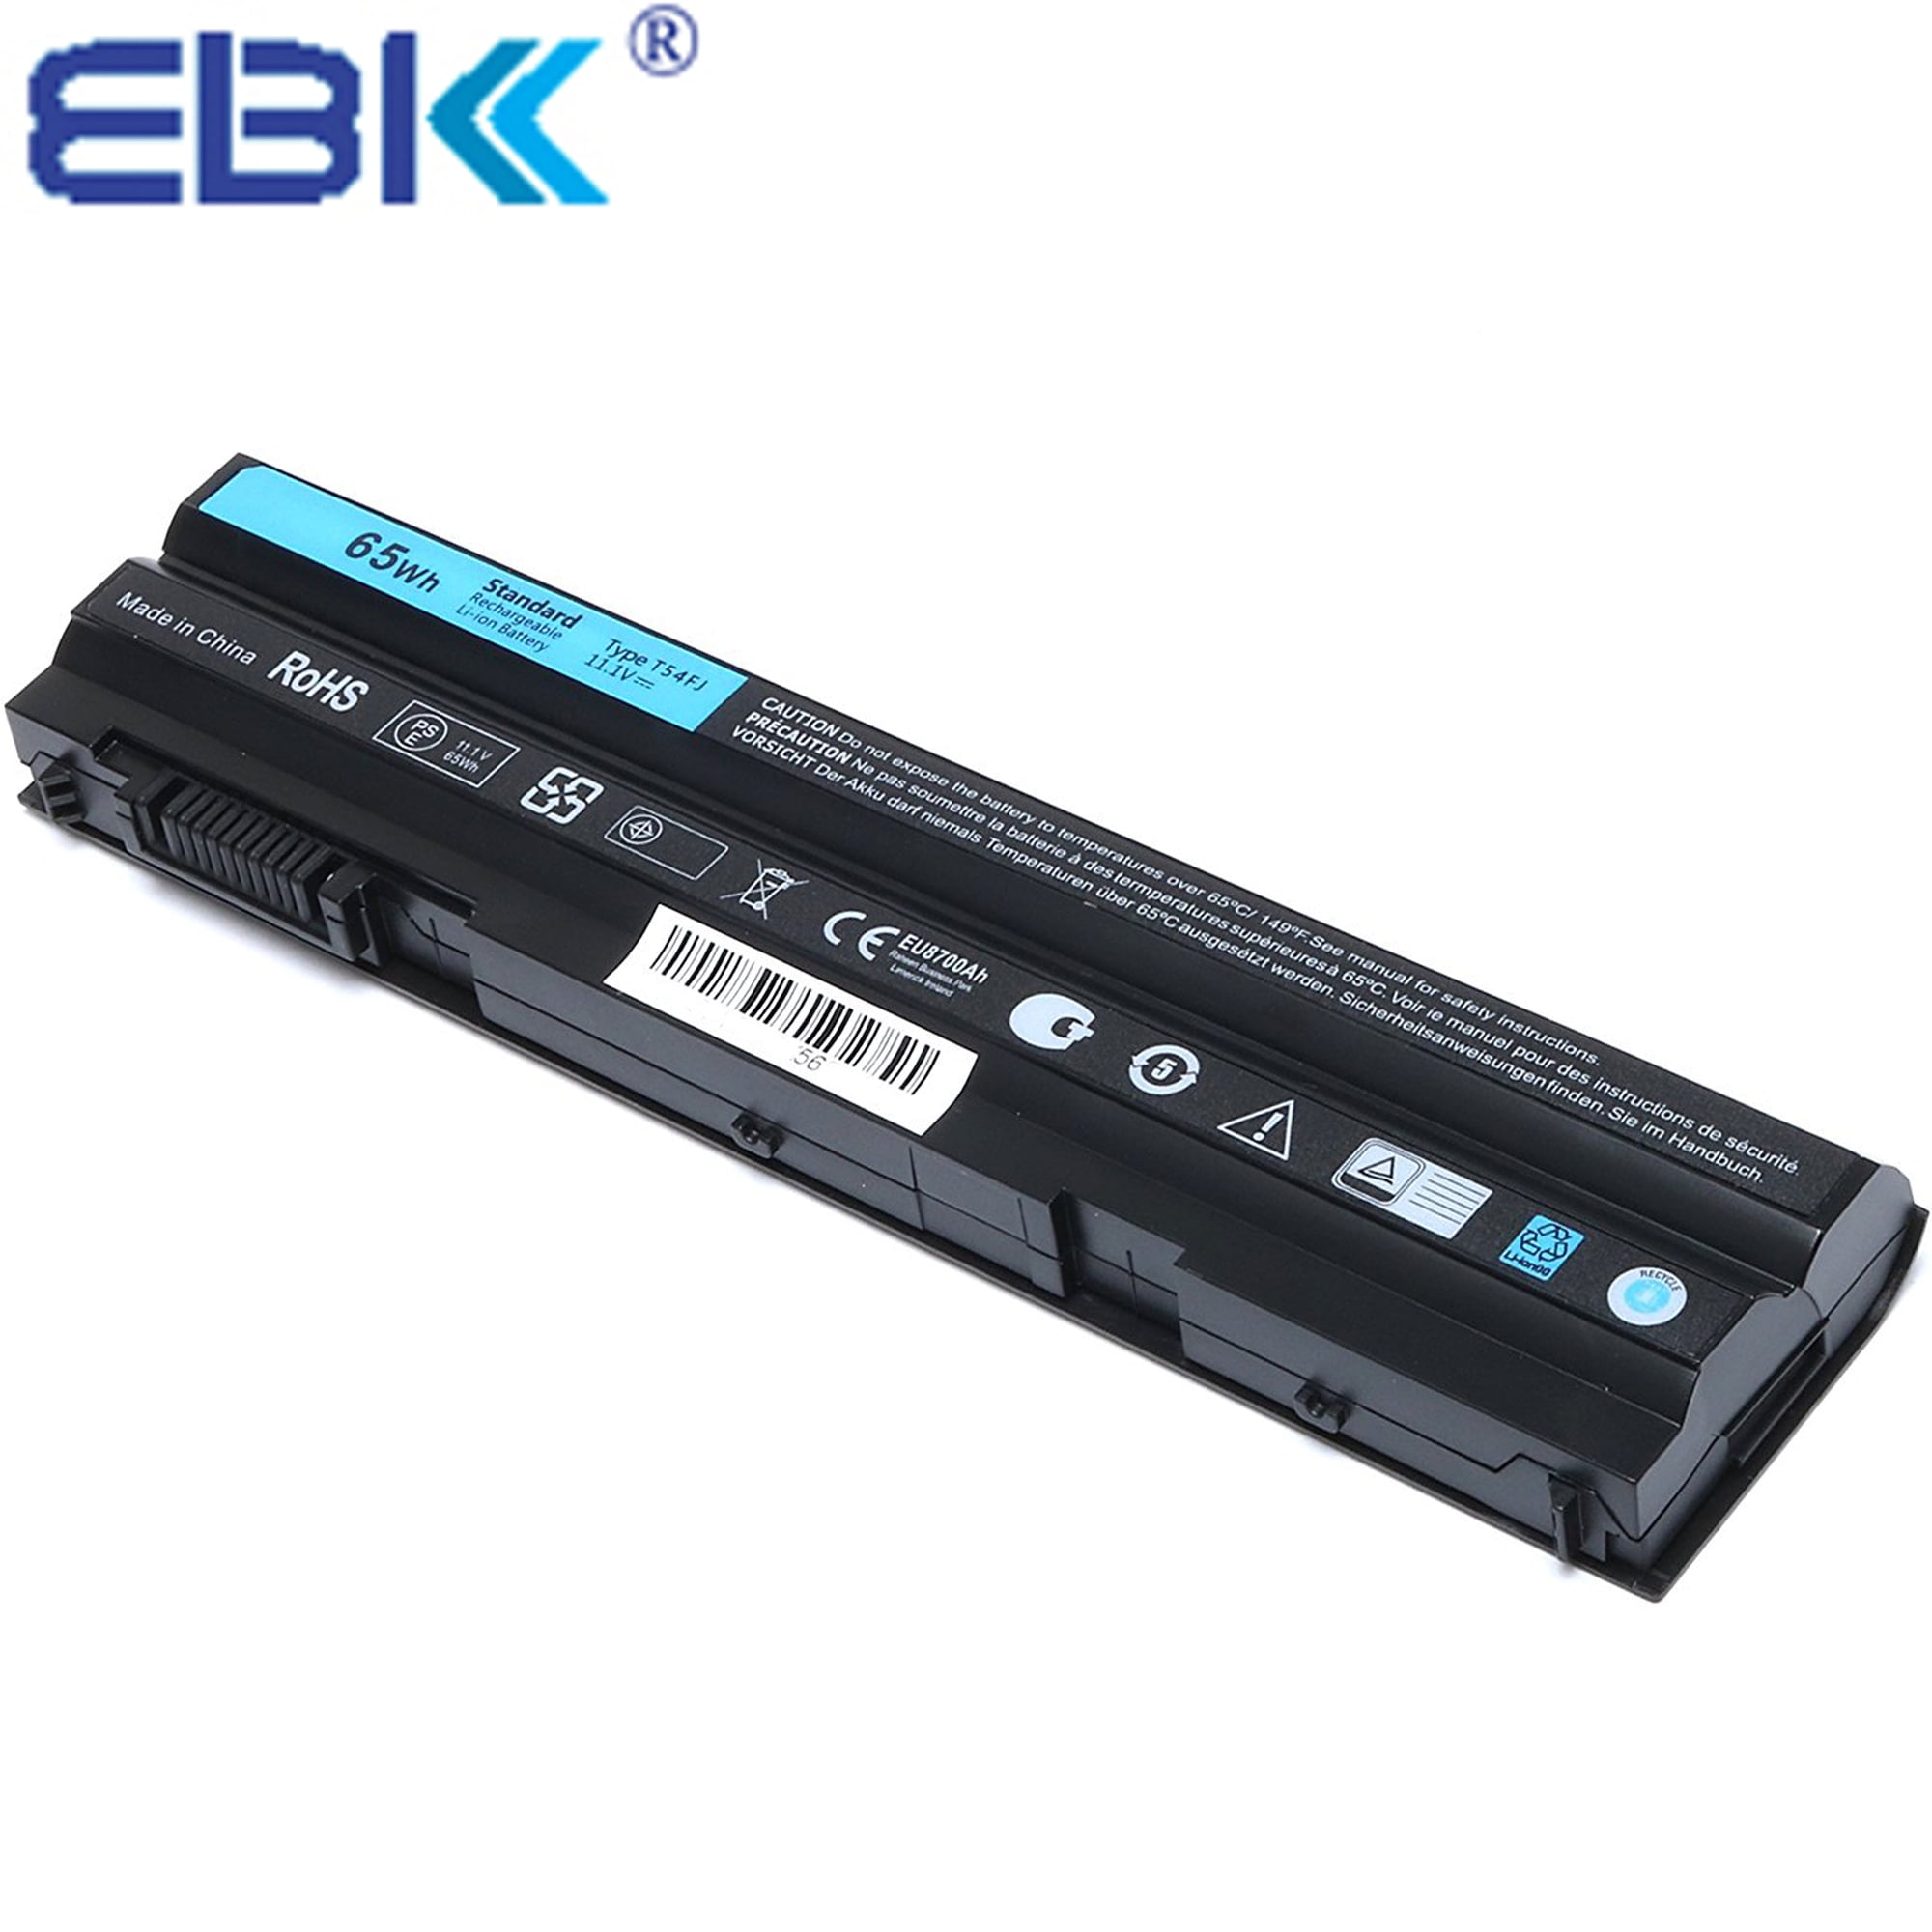 EBK 6-cell Laptop battery for Dell Latitude E6420 E6430 ...